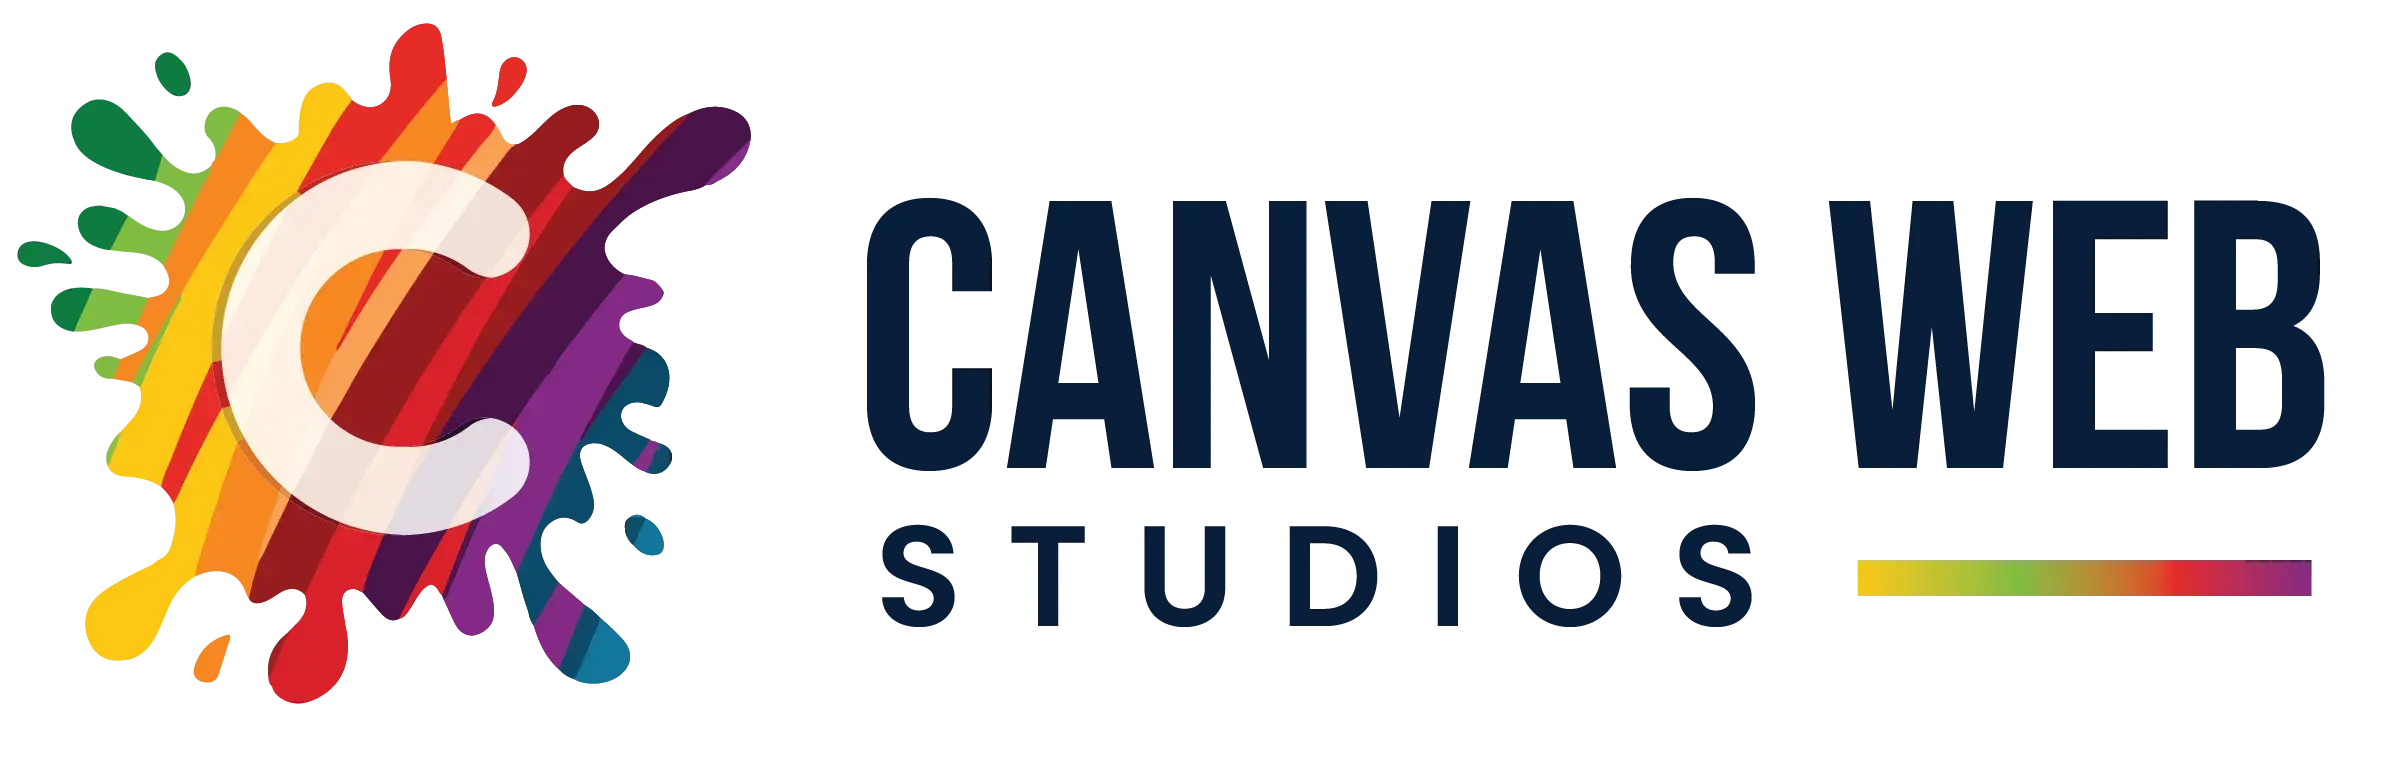 canvaswebstudios